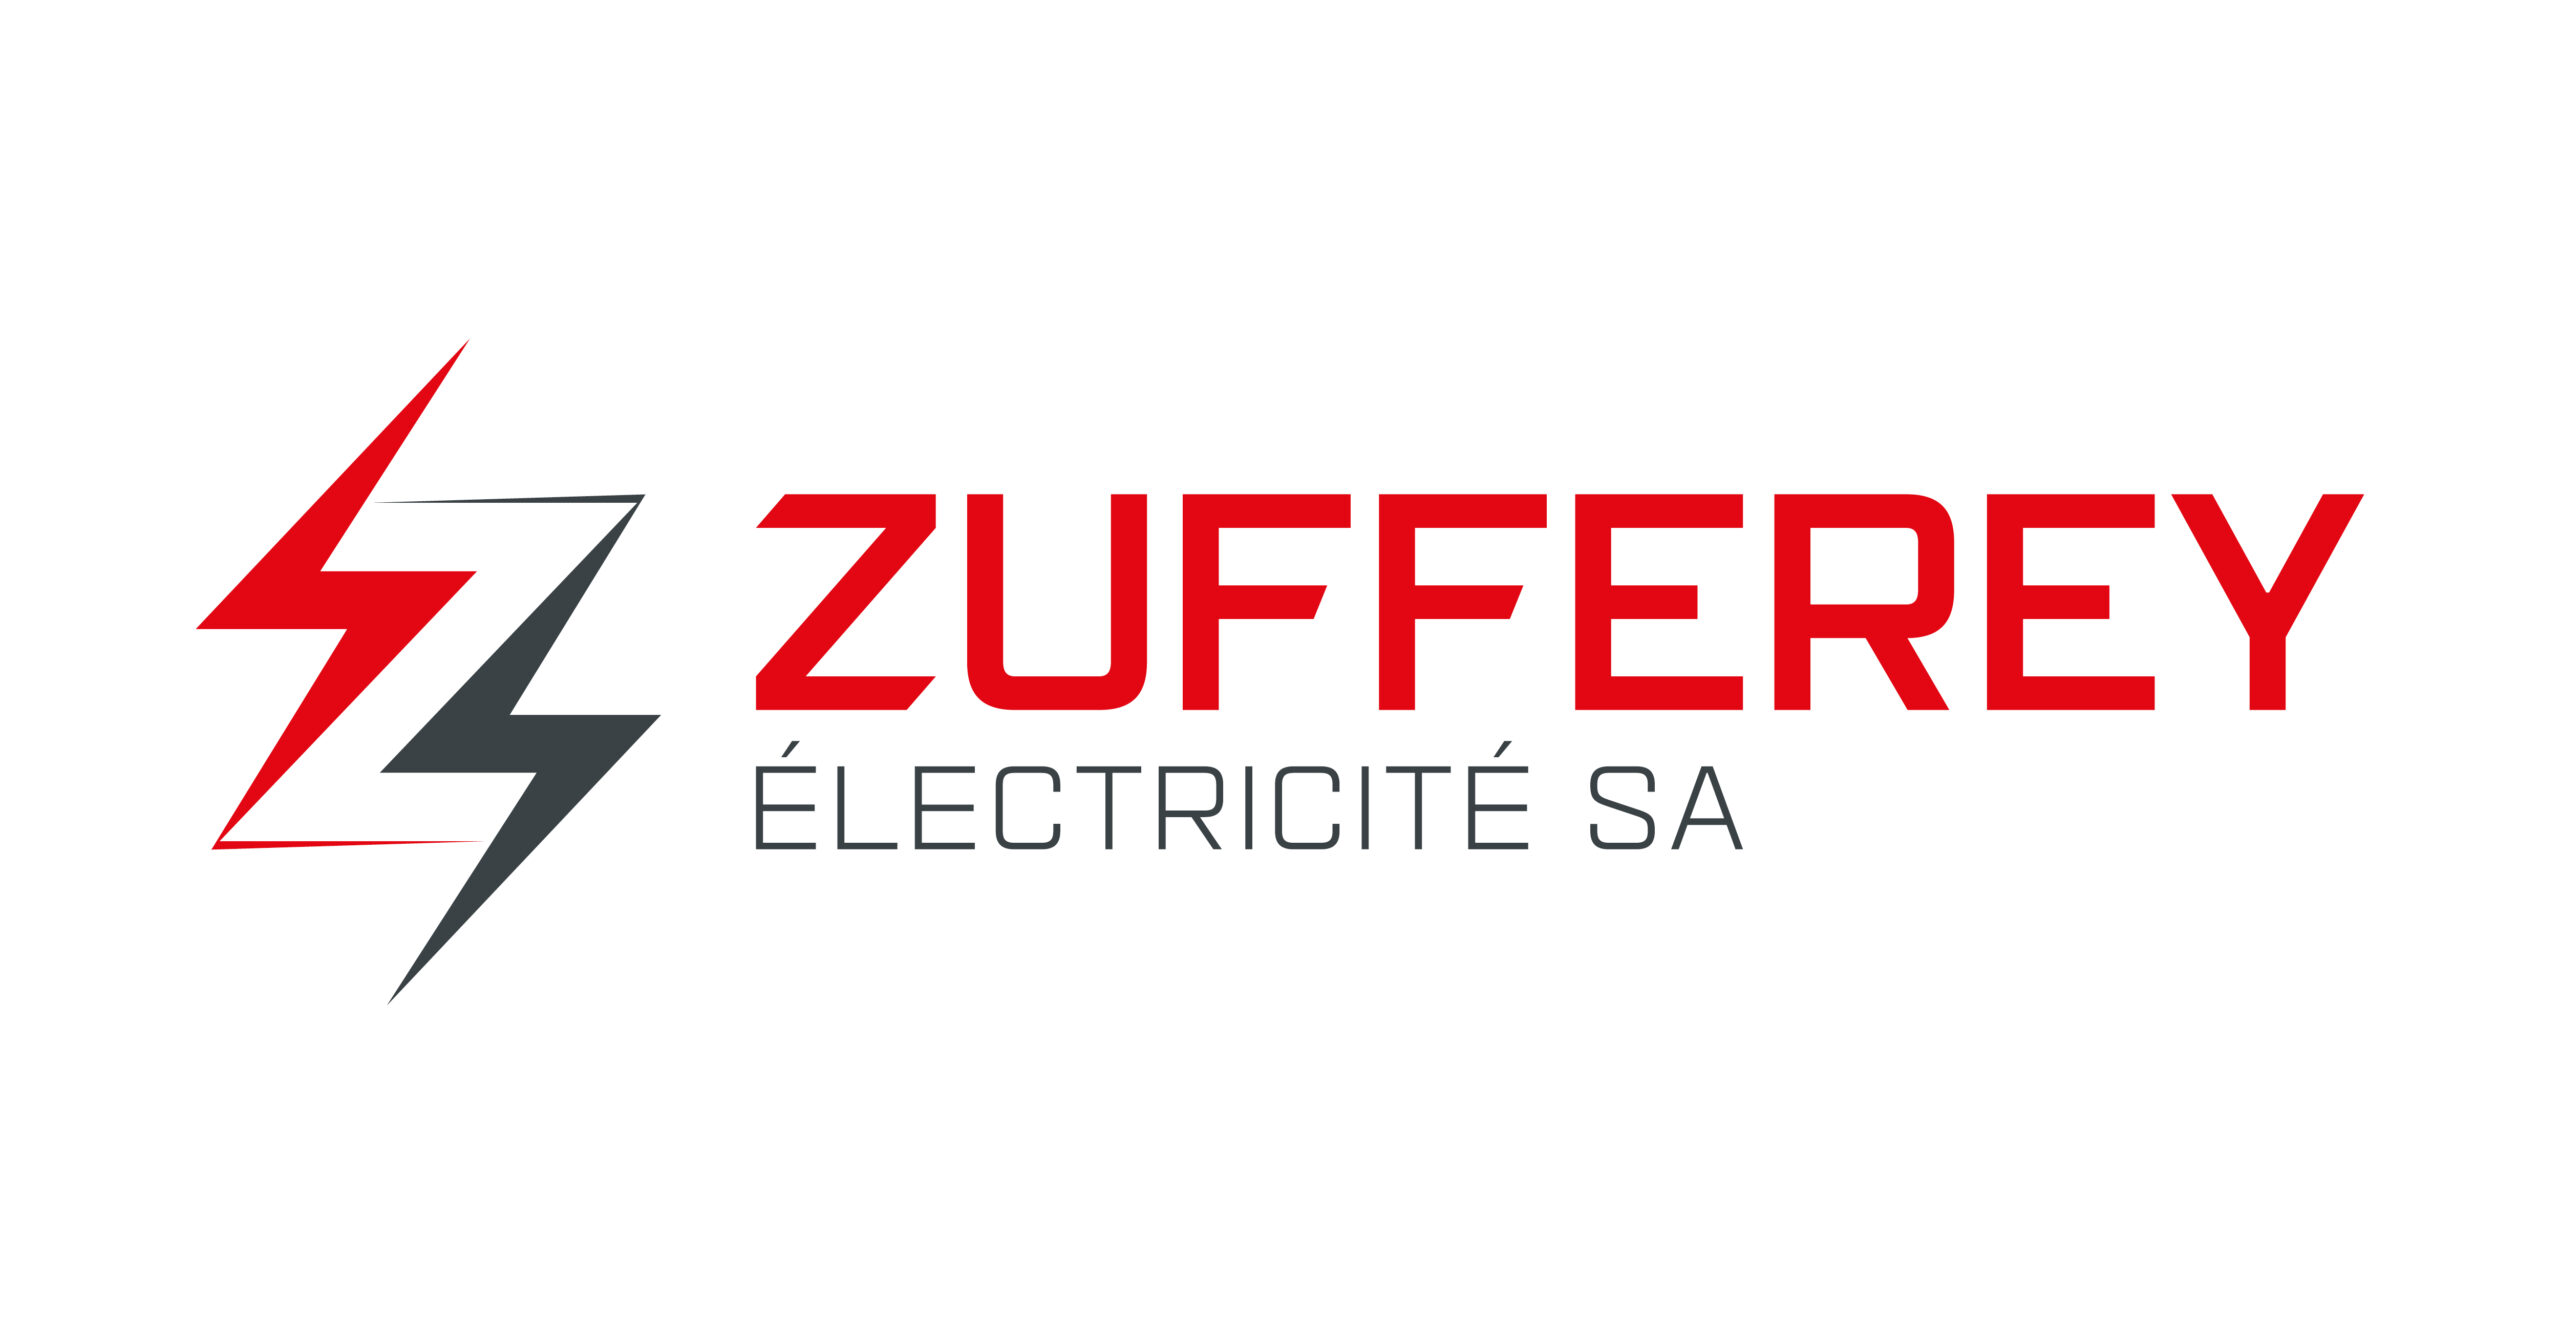 (c) Zuffelectro.ch